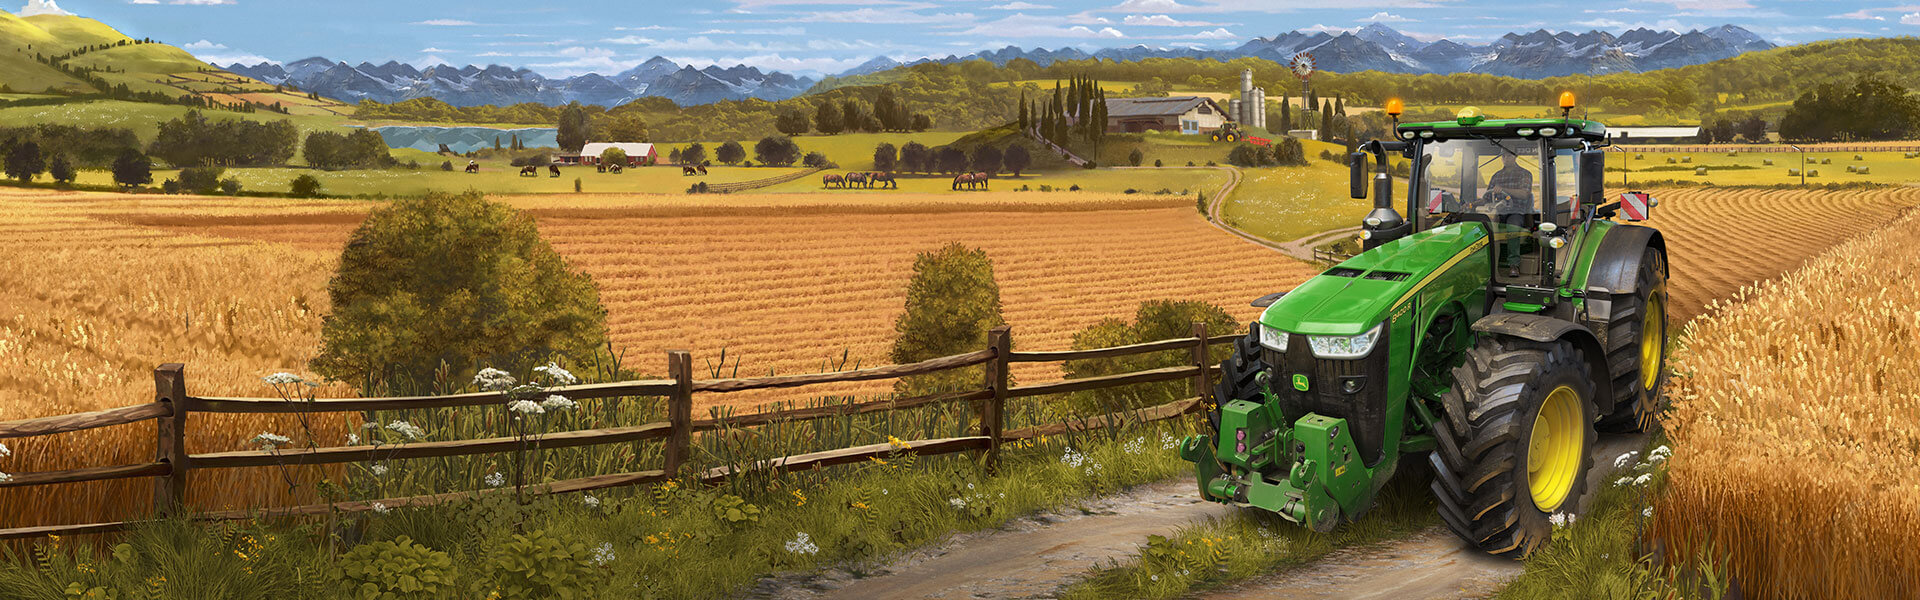 Farming Simulator 20: Farm 'Em All in new trailer for the upcoming